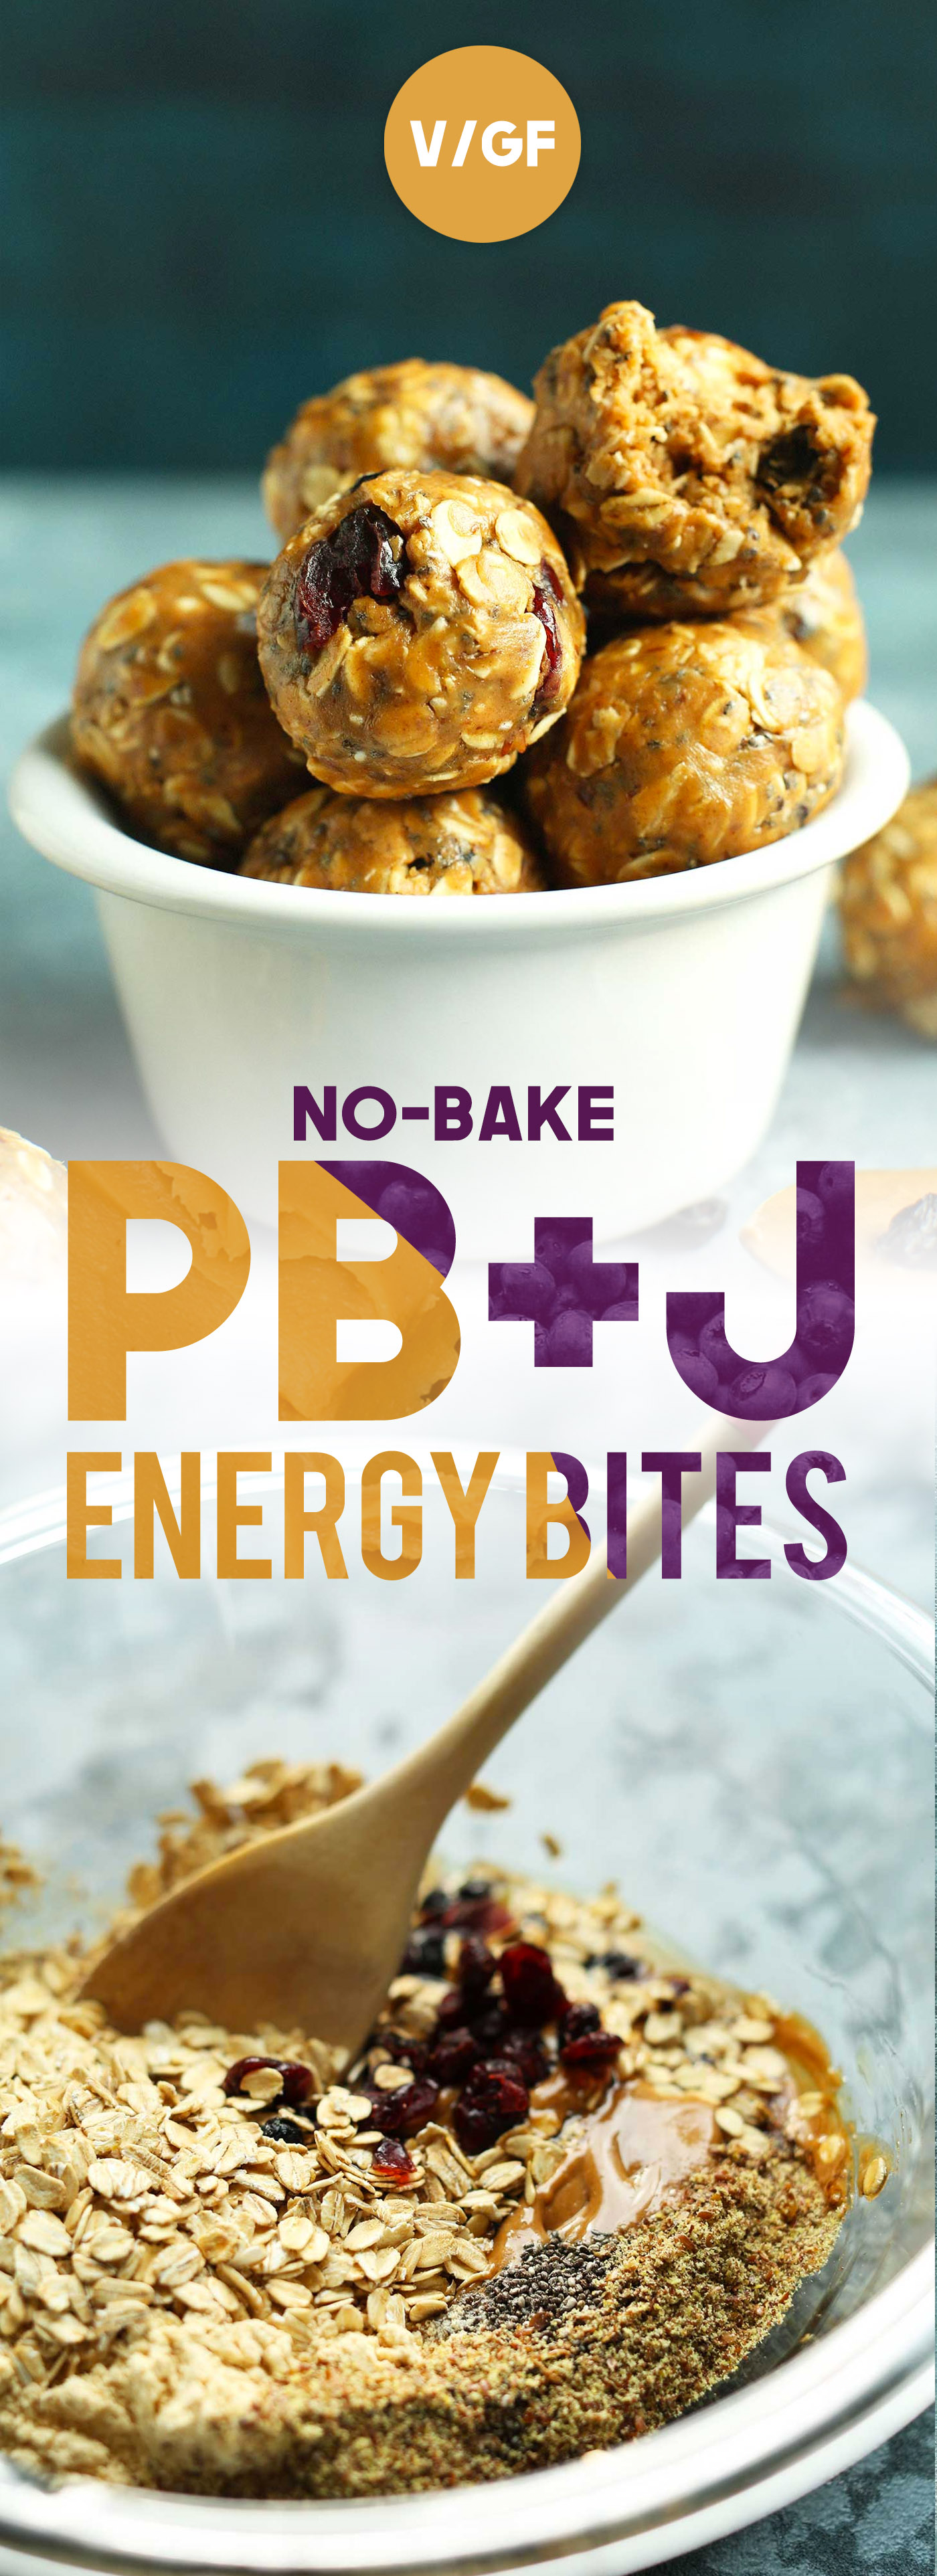 Minimalist-baker-no-baker-pb-j-energy-bites